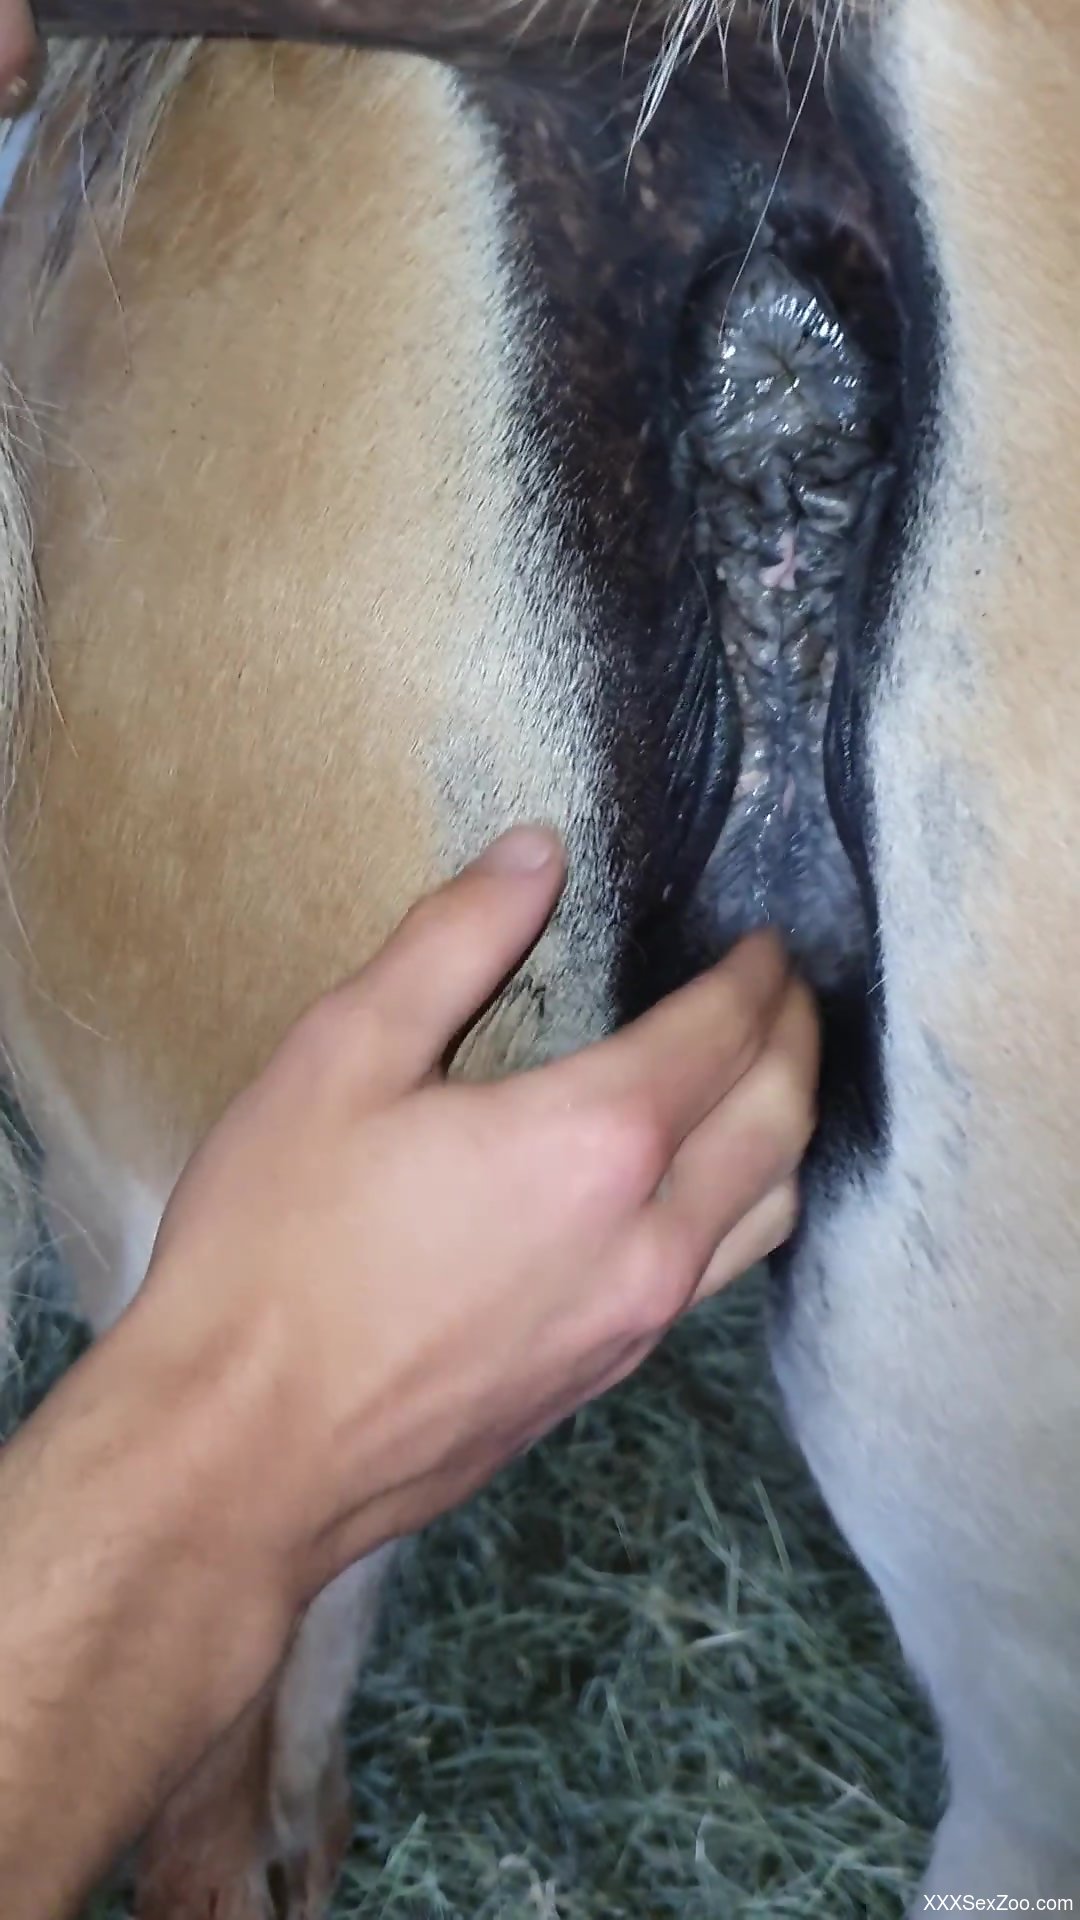 Horny guy finger fucks his female horse in harsh modes - XXXSexZoo.com